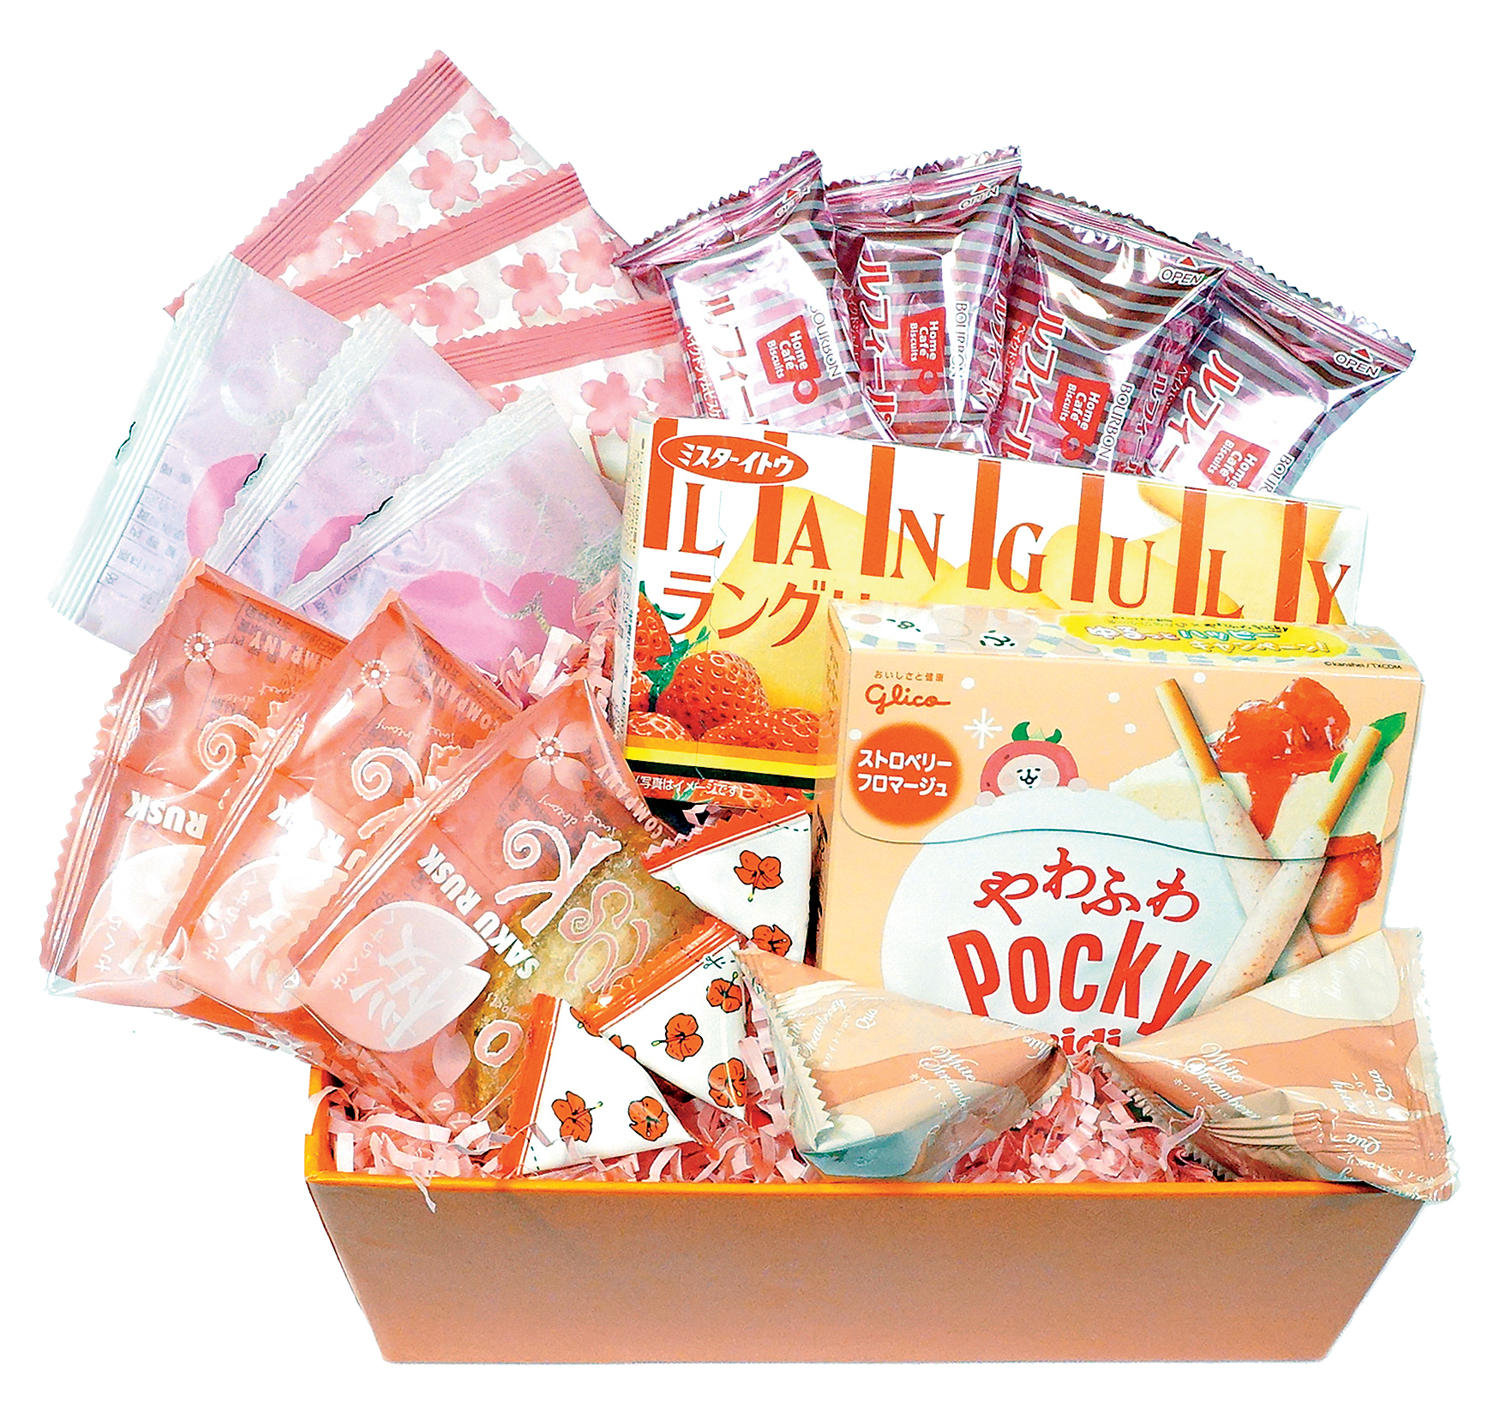 Bokksu snack box